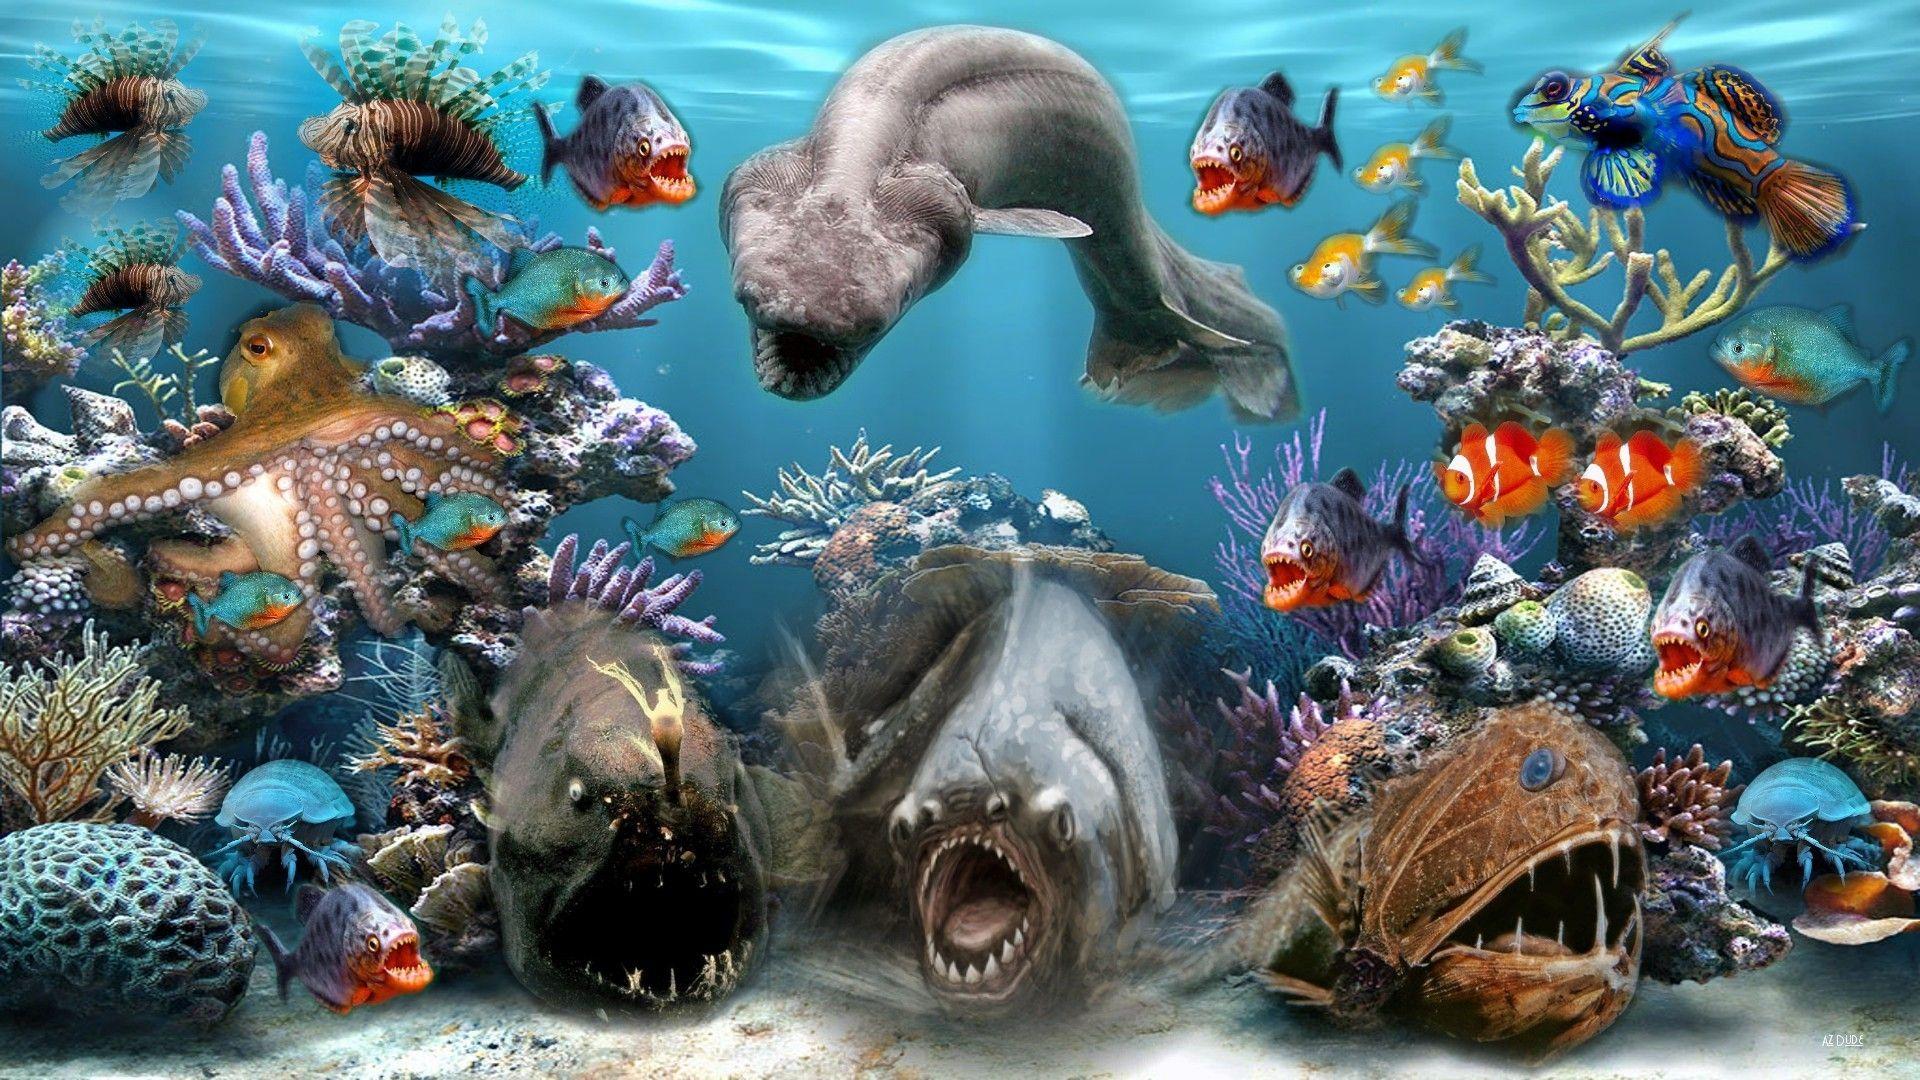 You can download Sea Creature HD Wallpaper here. Sea Creature HD